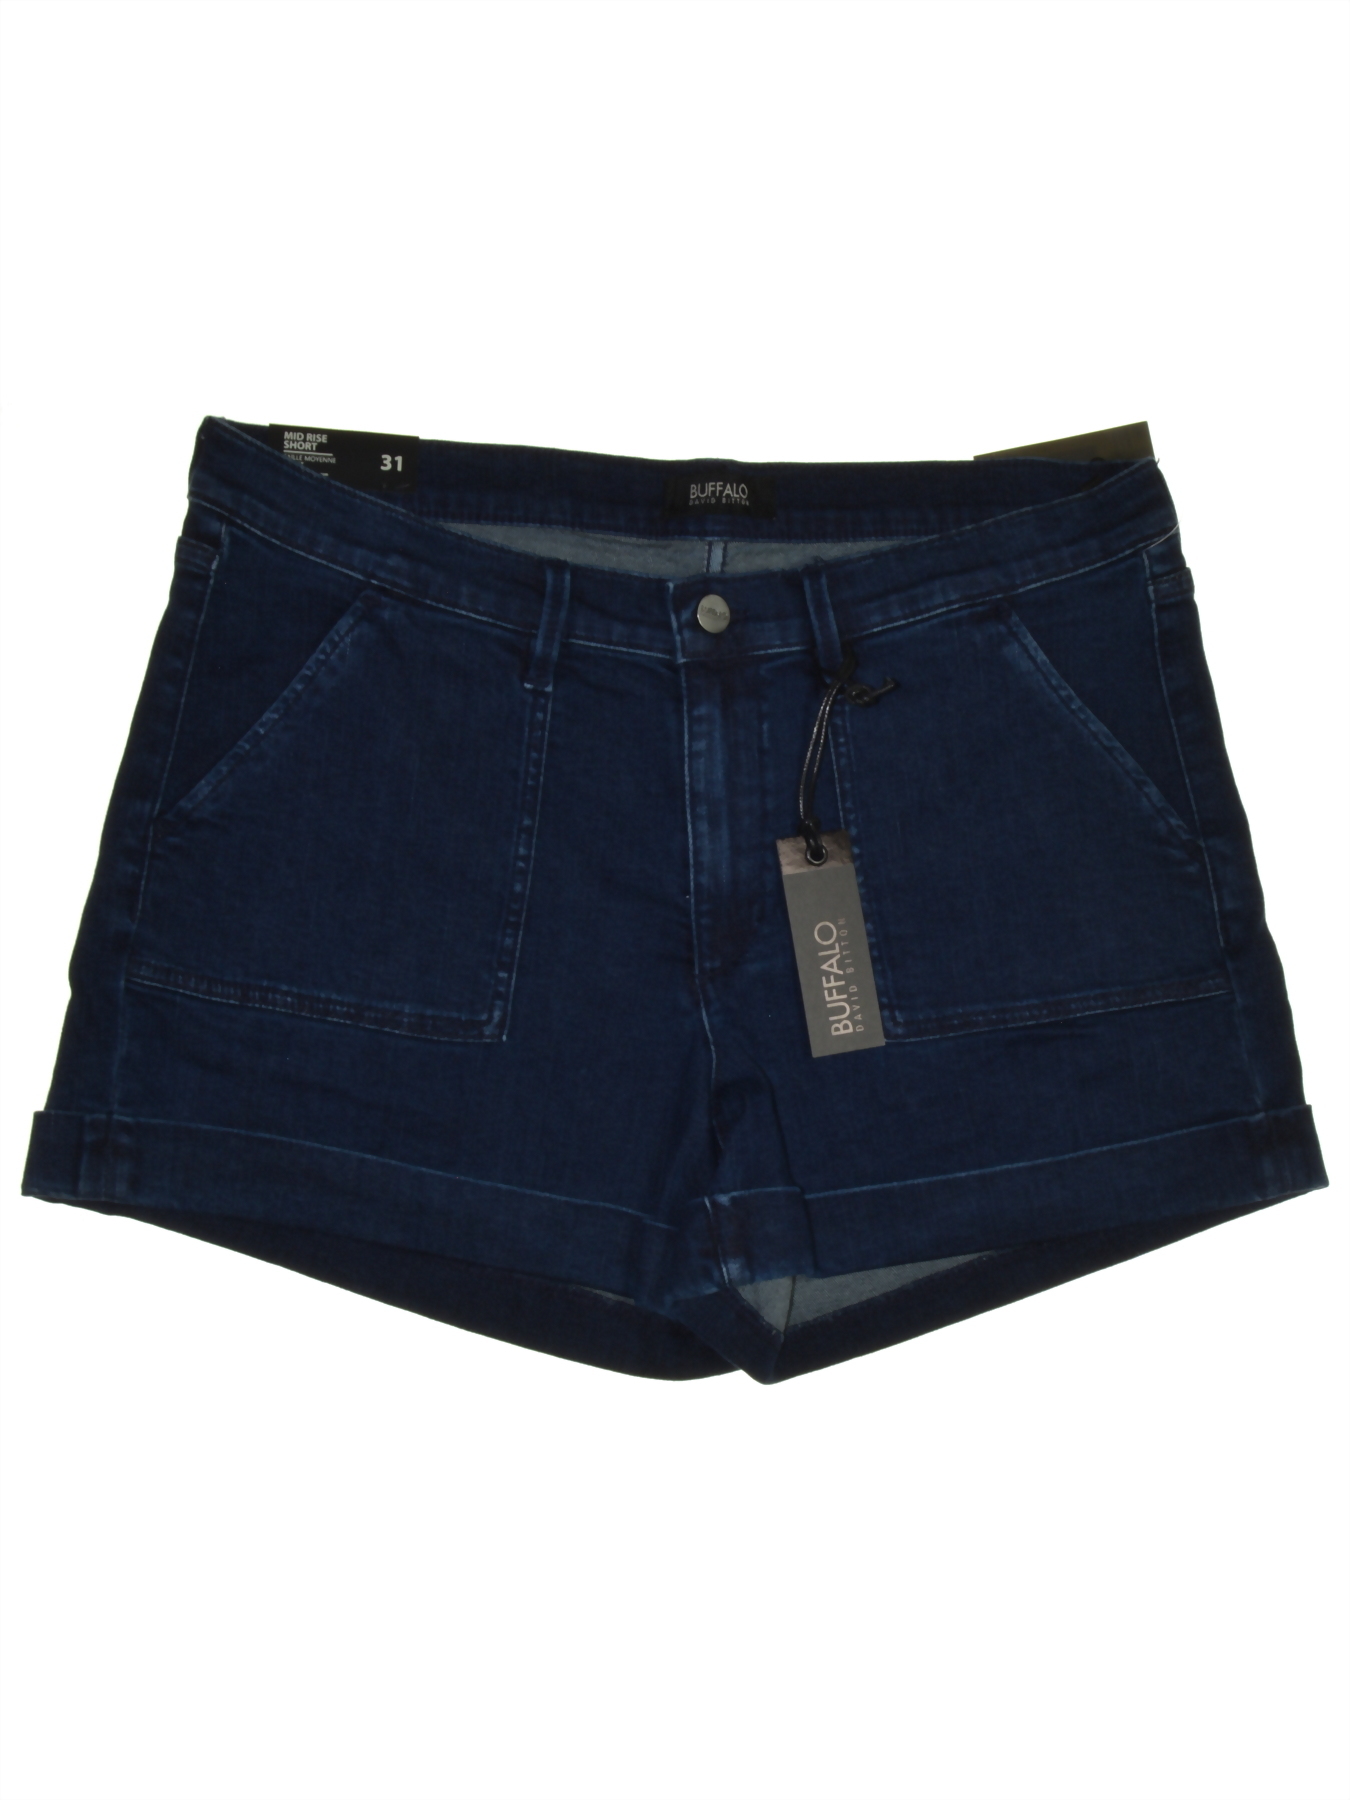 Buffalo Jeans Women Size 32 Dark Blue Denim Shorts Pants | Canerra